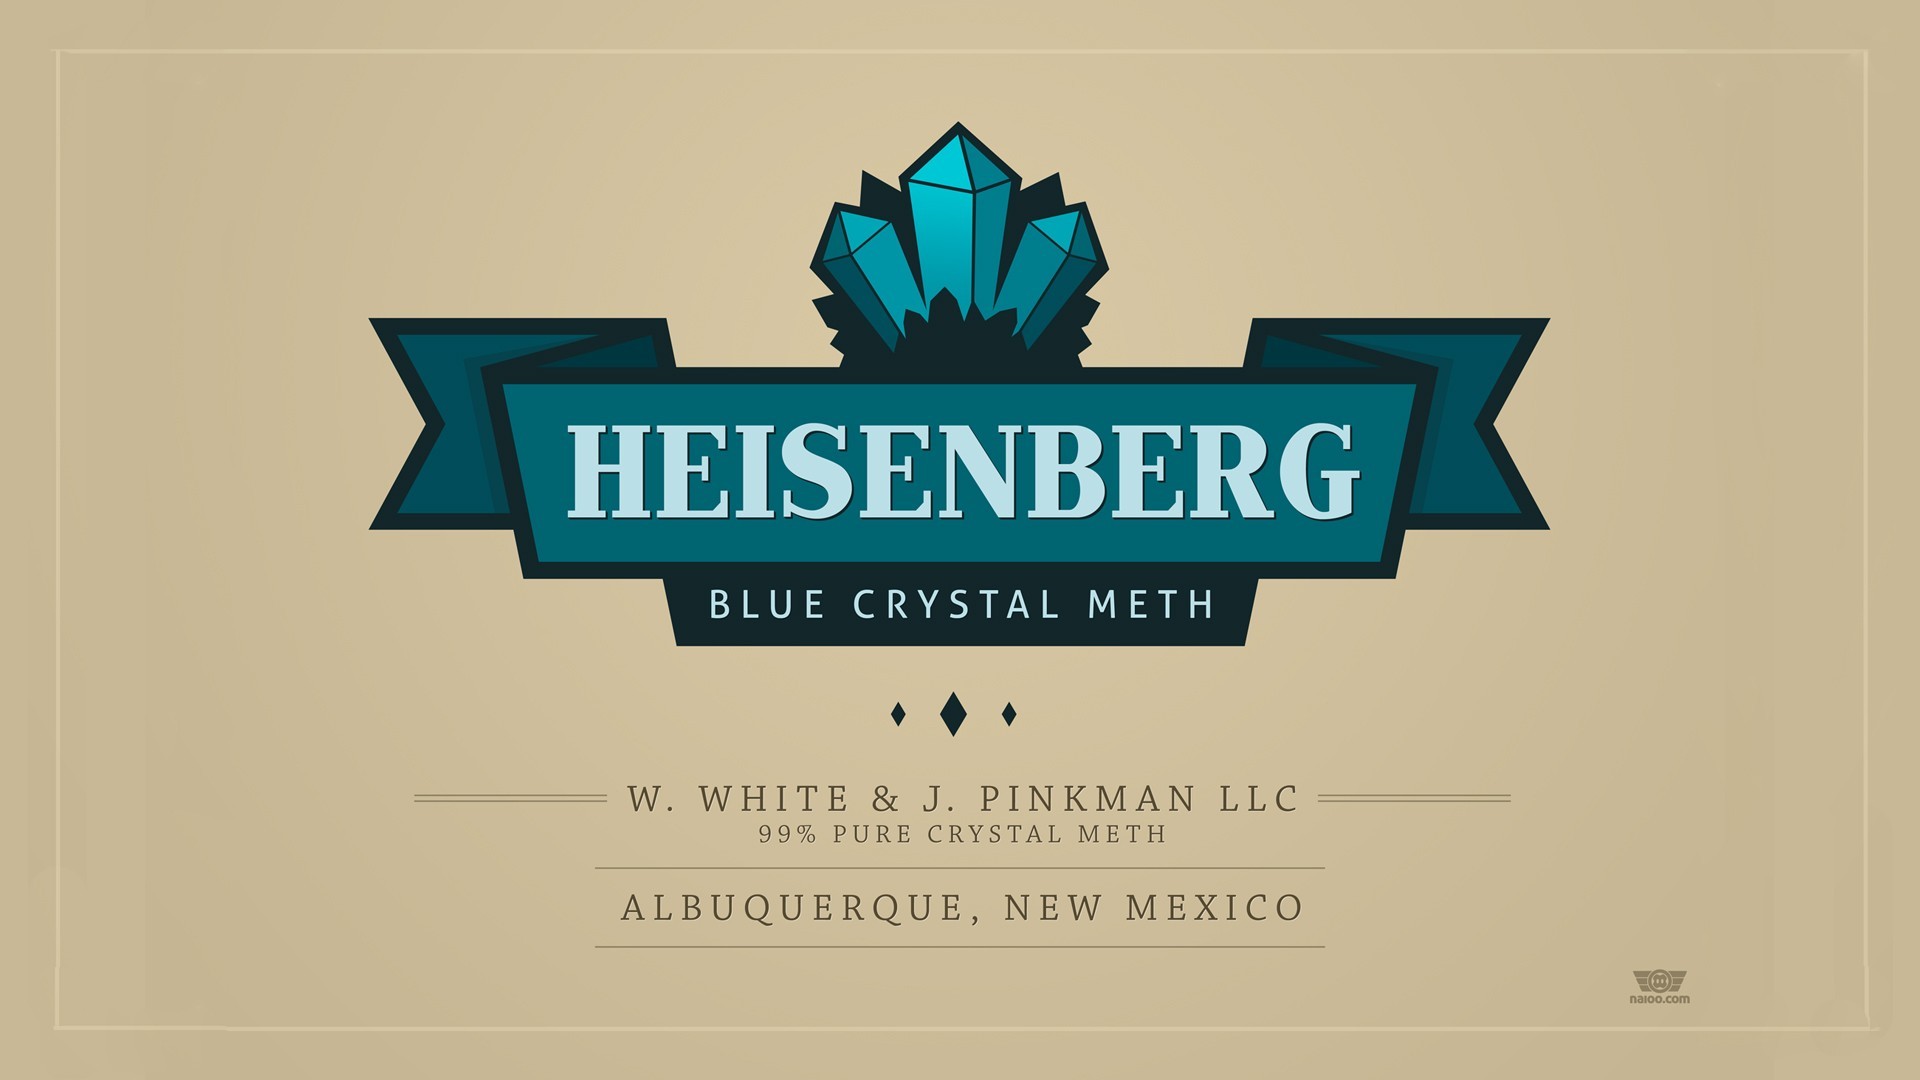 General 1920x1080 Breaking Bad Heisenberg albuquerque TV series Walter White Jesse Pinkman